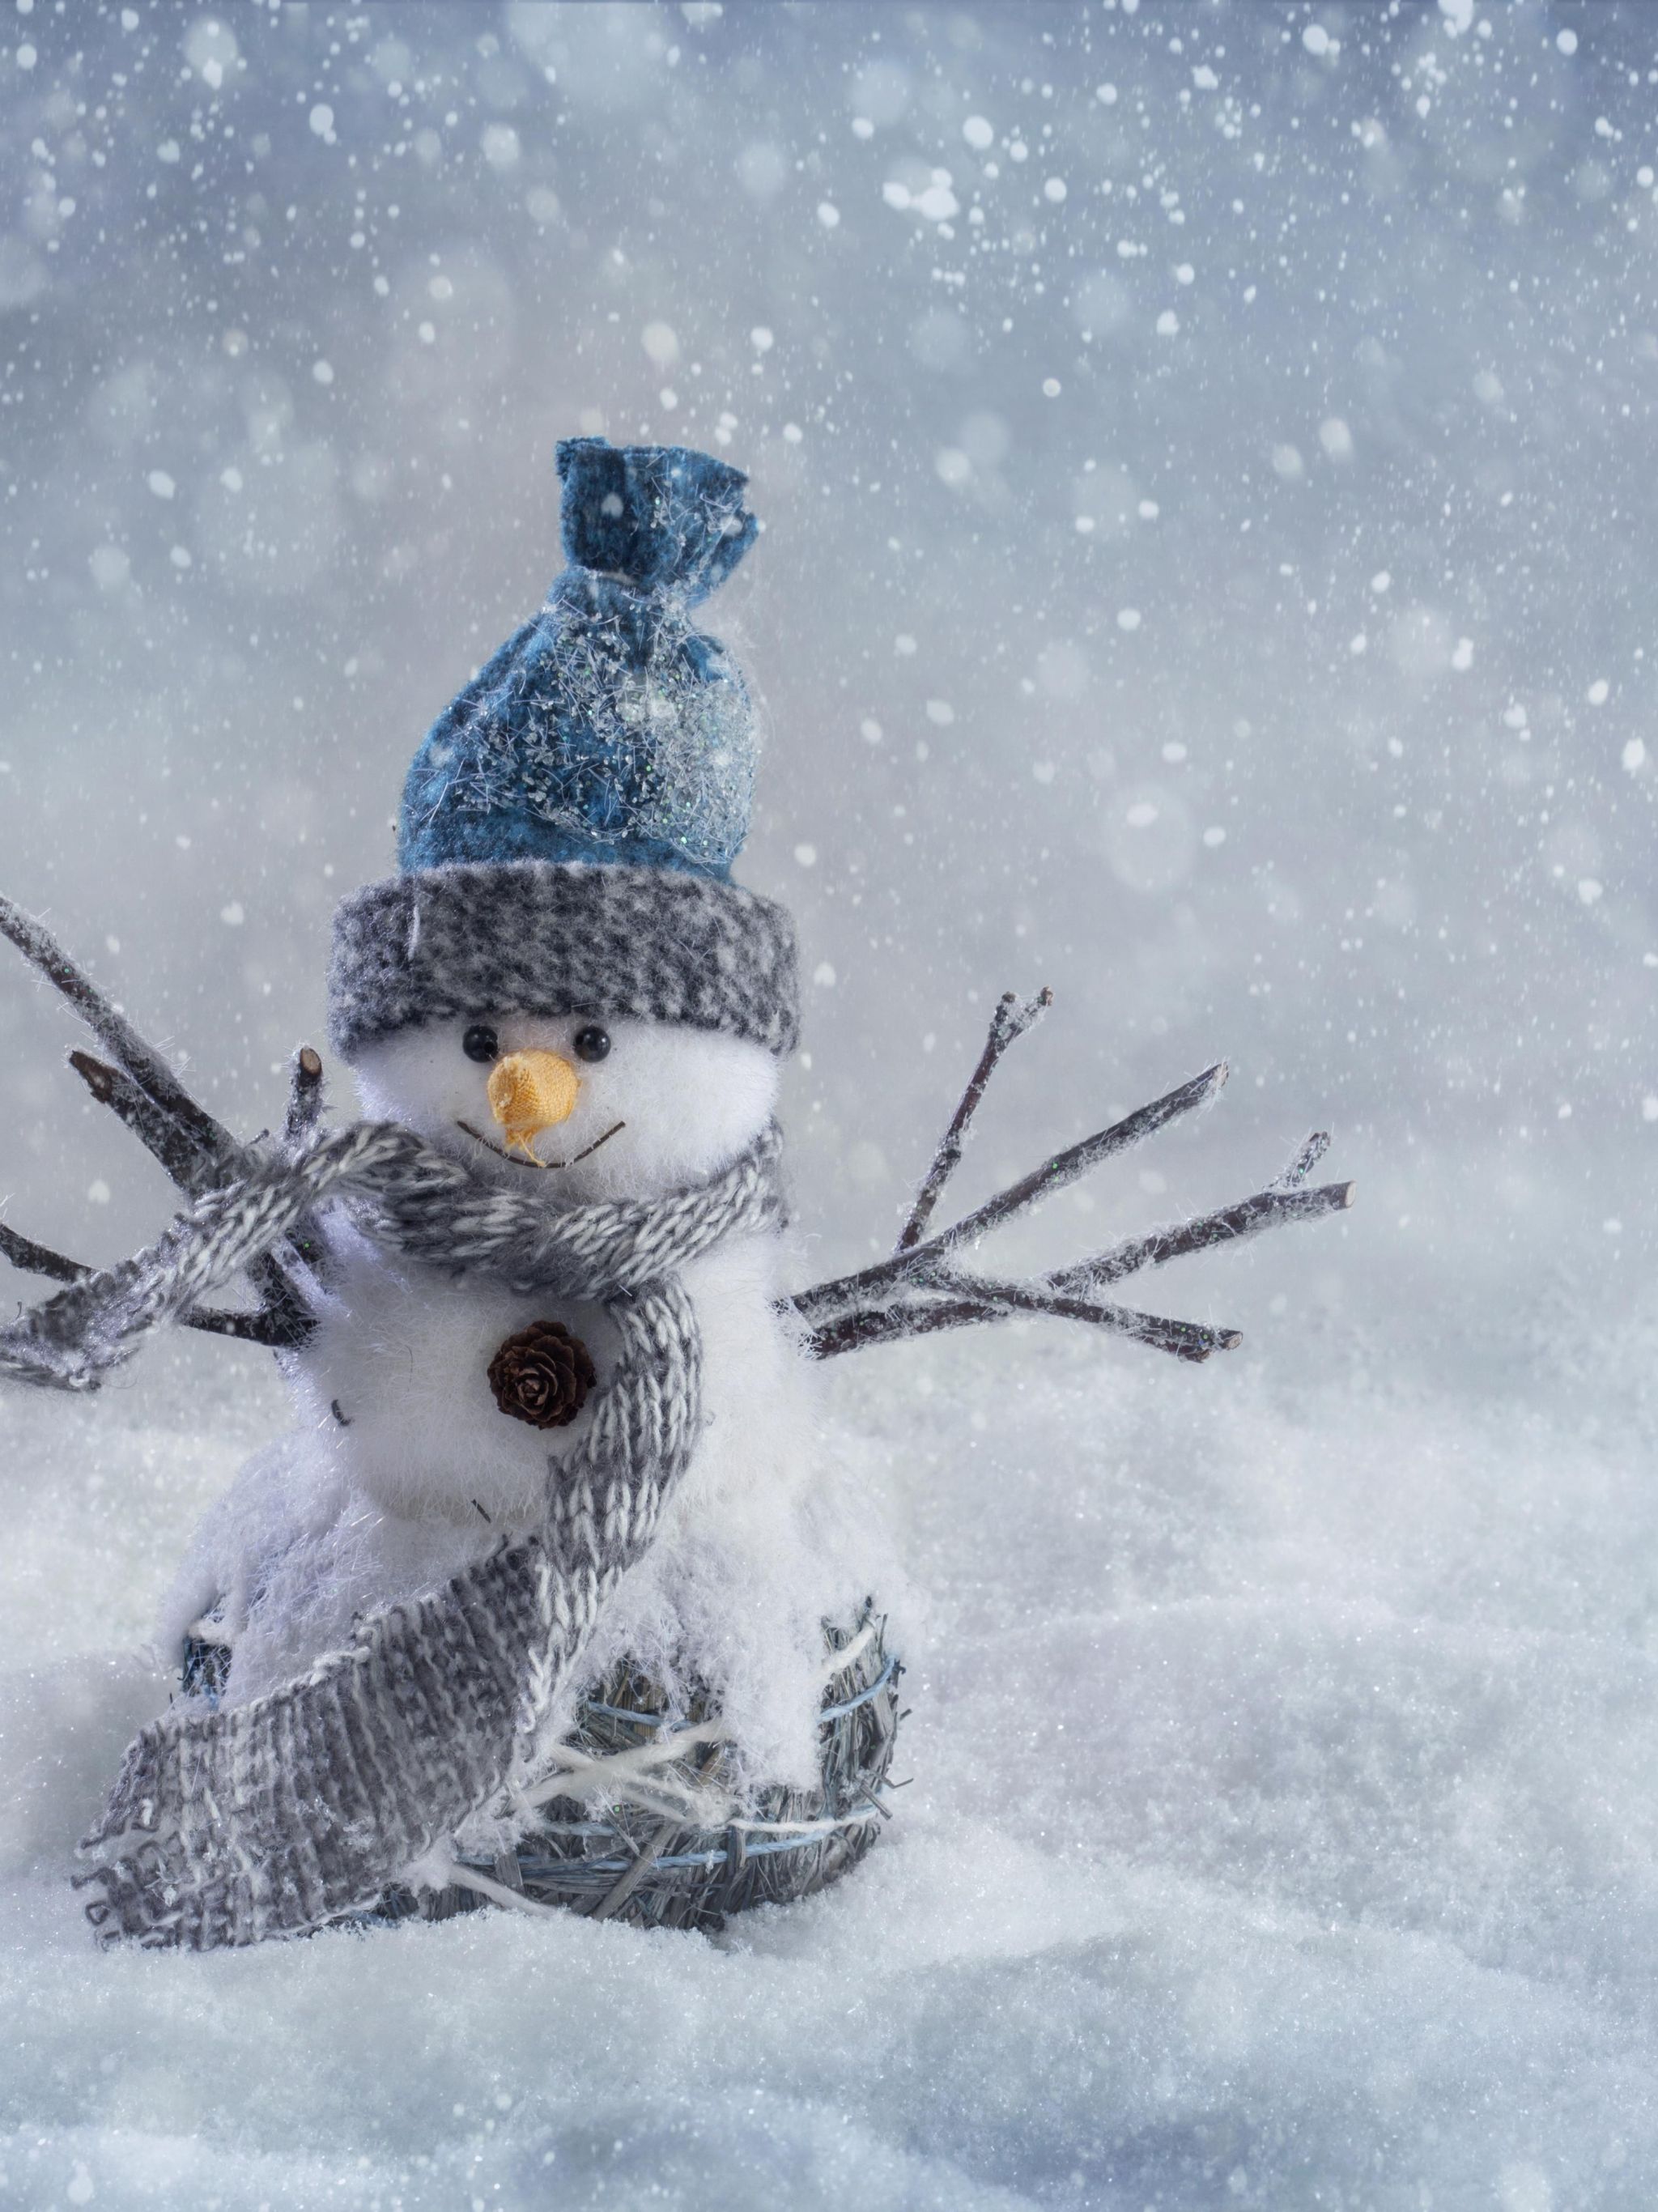 HD wallpaper snowman figure cute winter wintry decoration christmas   Wallpaper Flare